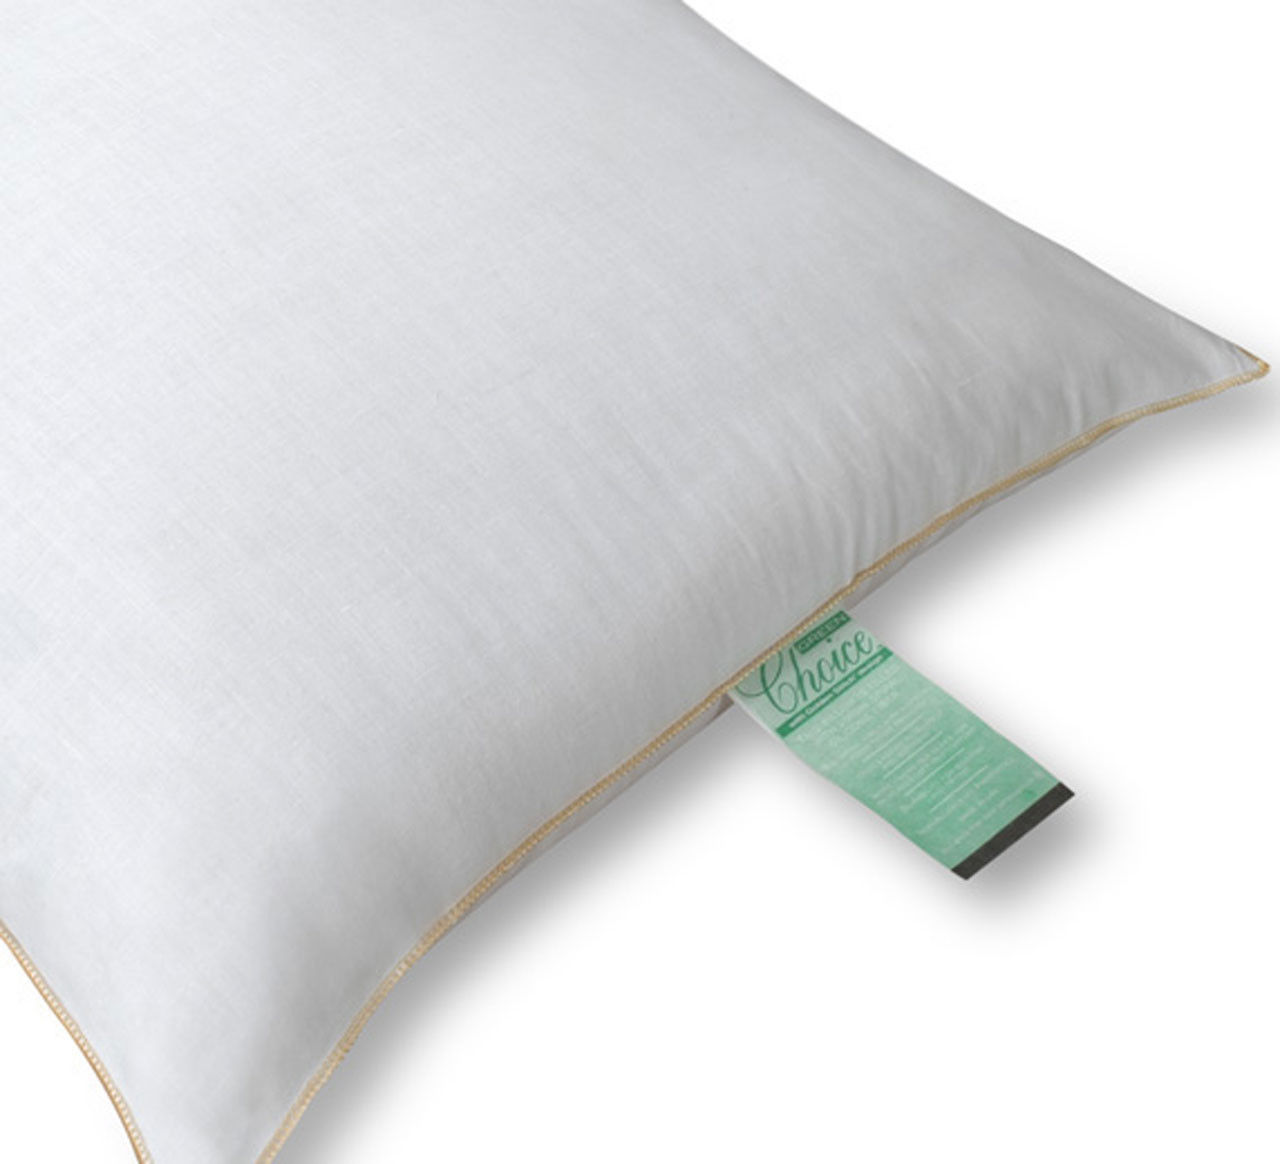 How can green choice pillows enhance my overall sleeping experience?